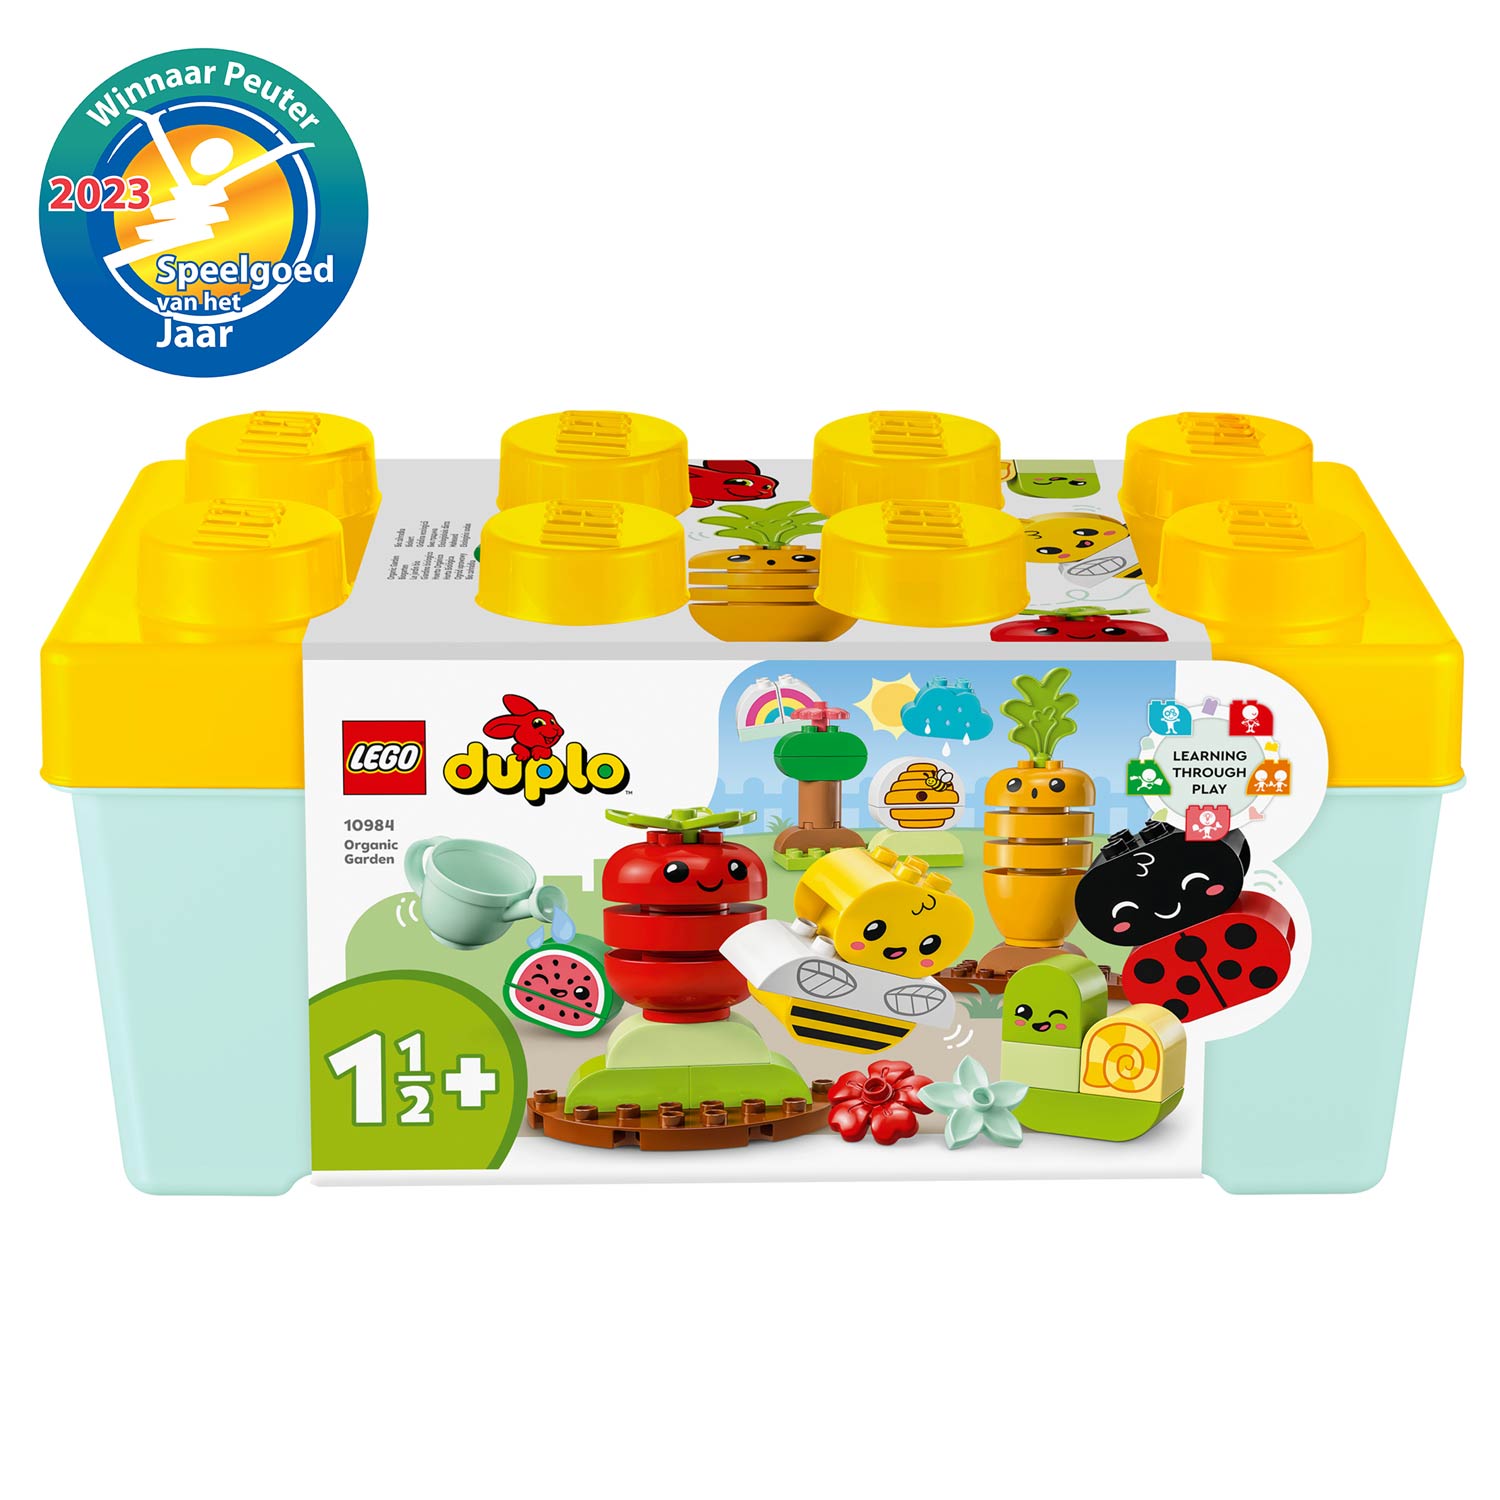 LEGO Duplo 10984 Le jardin biologique